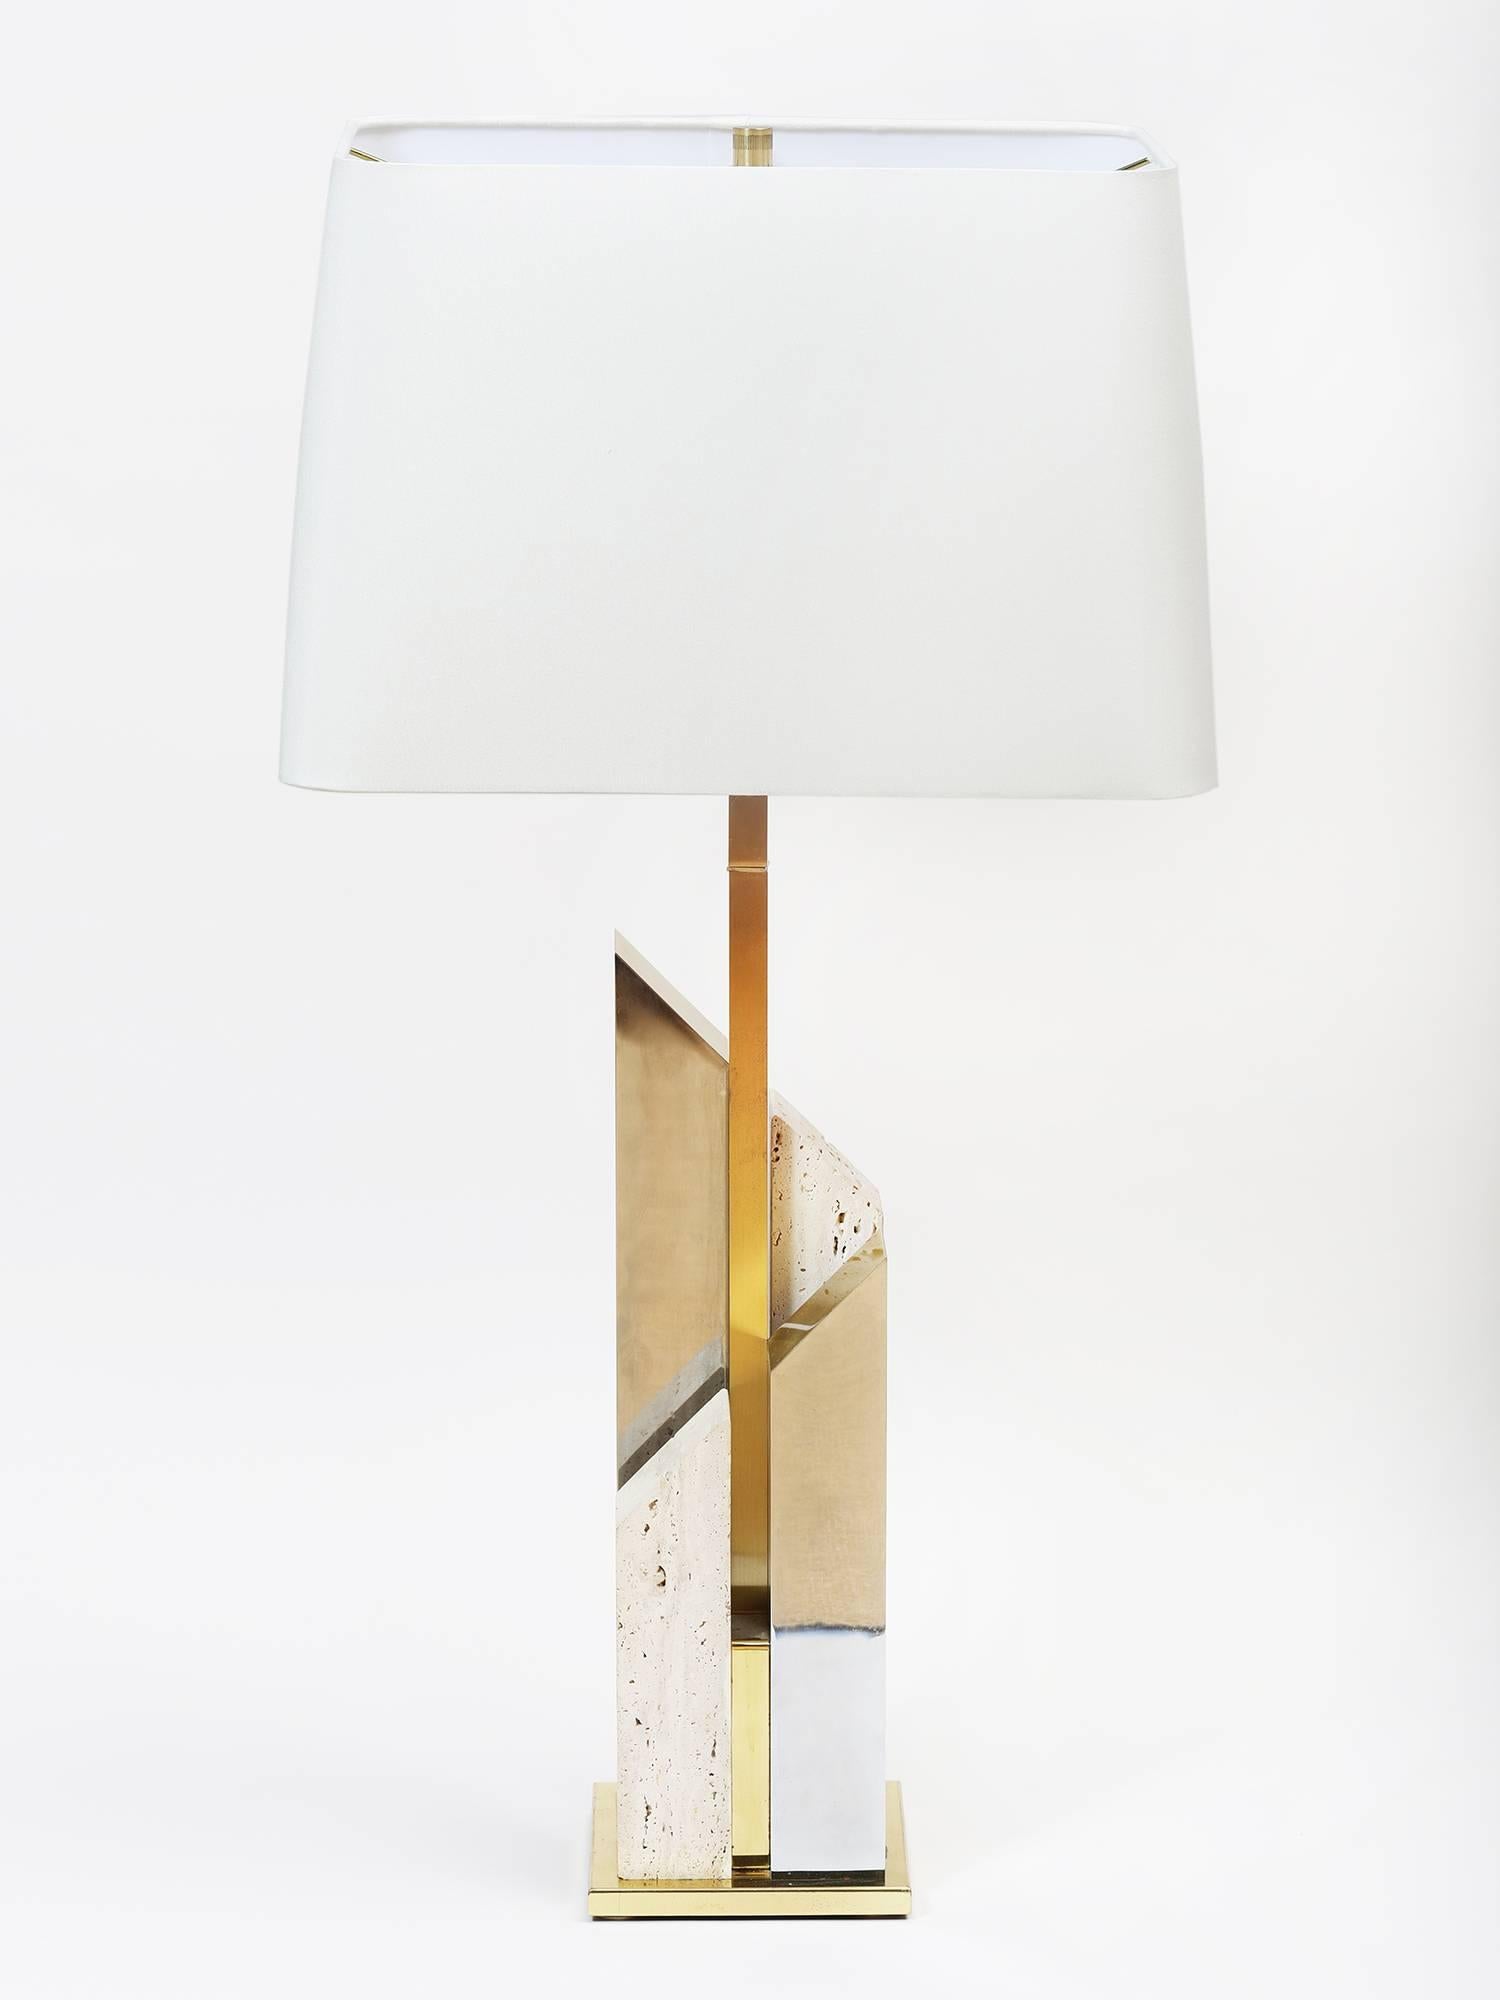 Italian table lamp by Gaetano Sciolari made of travertine, chrome-plated metal and brass.